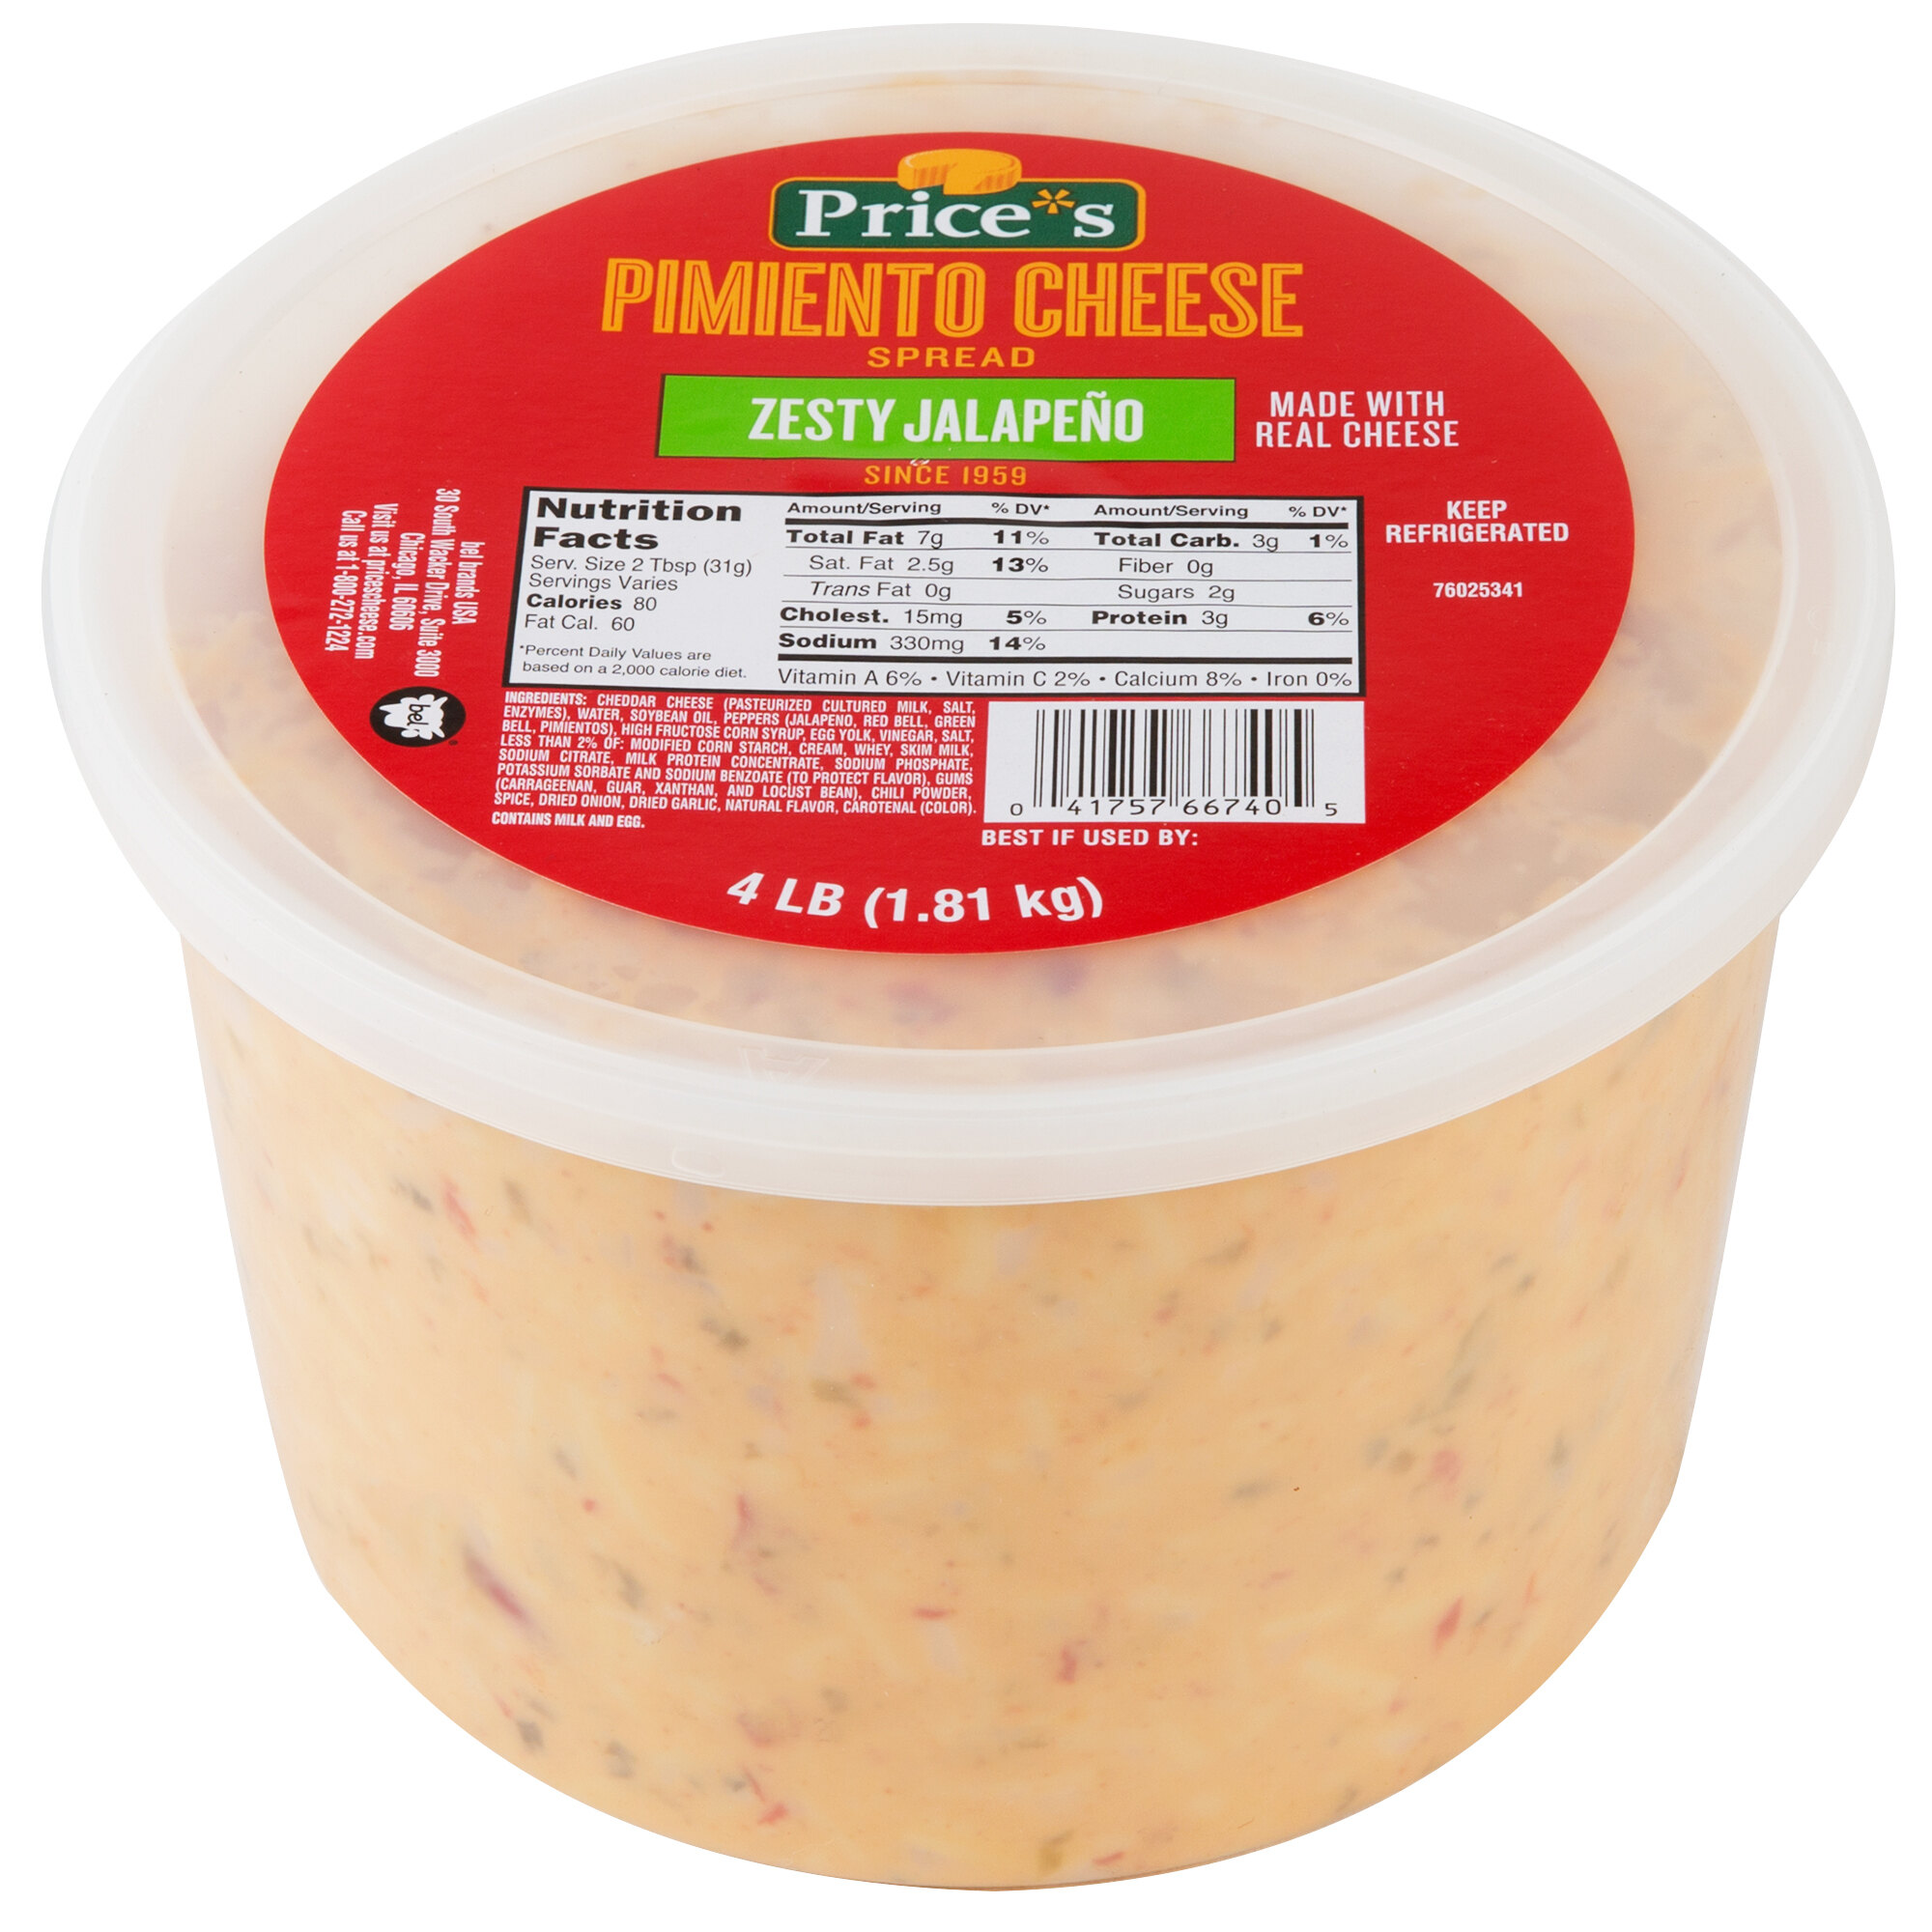 Price's Zesty Jalapeno Pimiento Cheese Spread 4 lb. Tub 4/Case